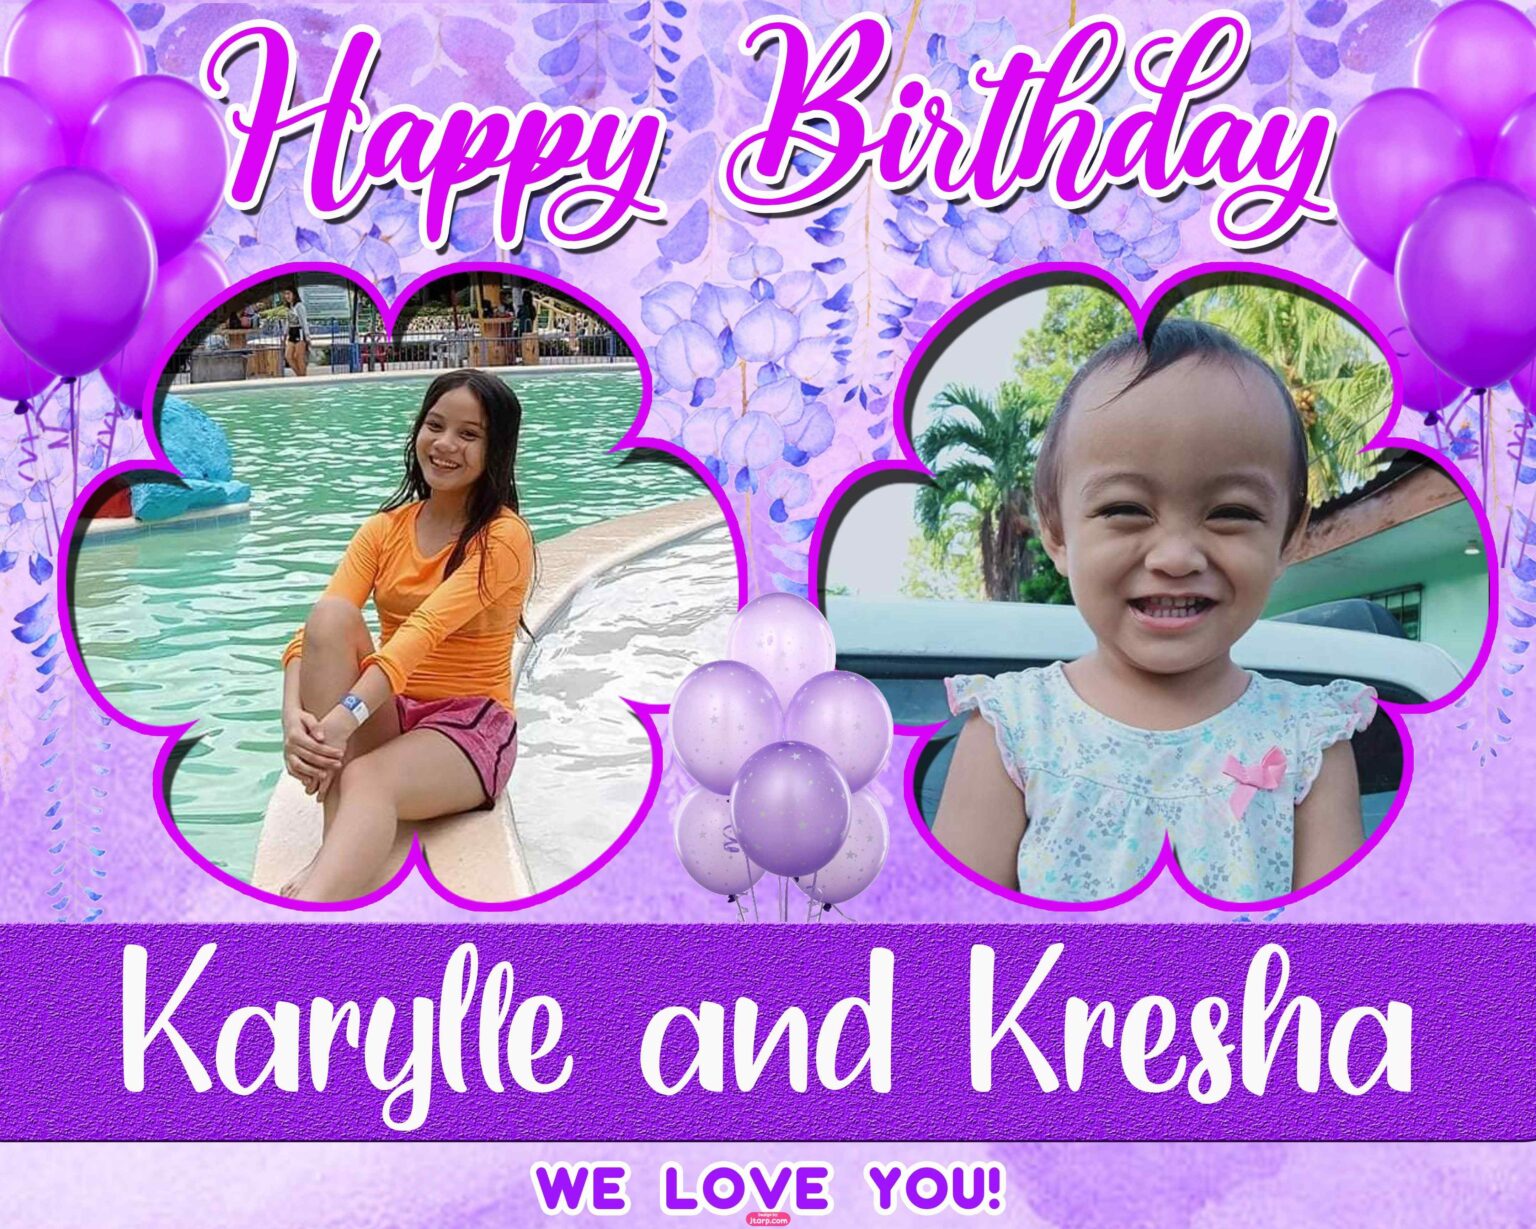 4x5 Happy birthday Karylle and Kresha